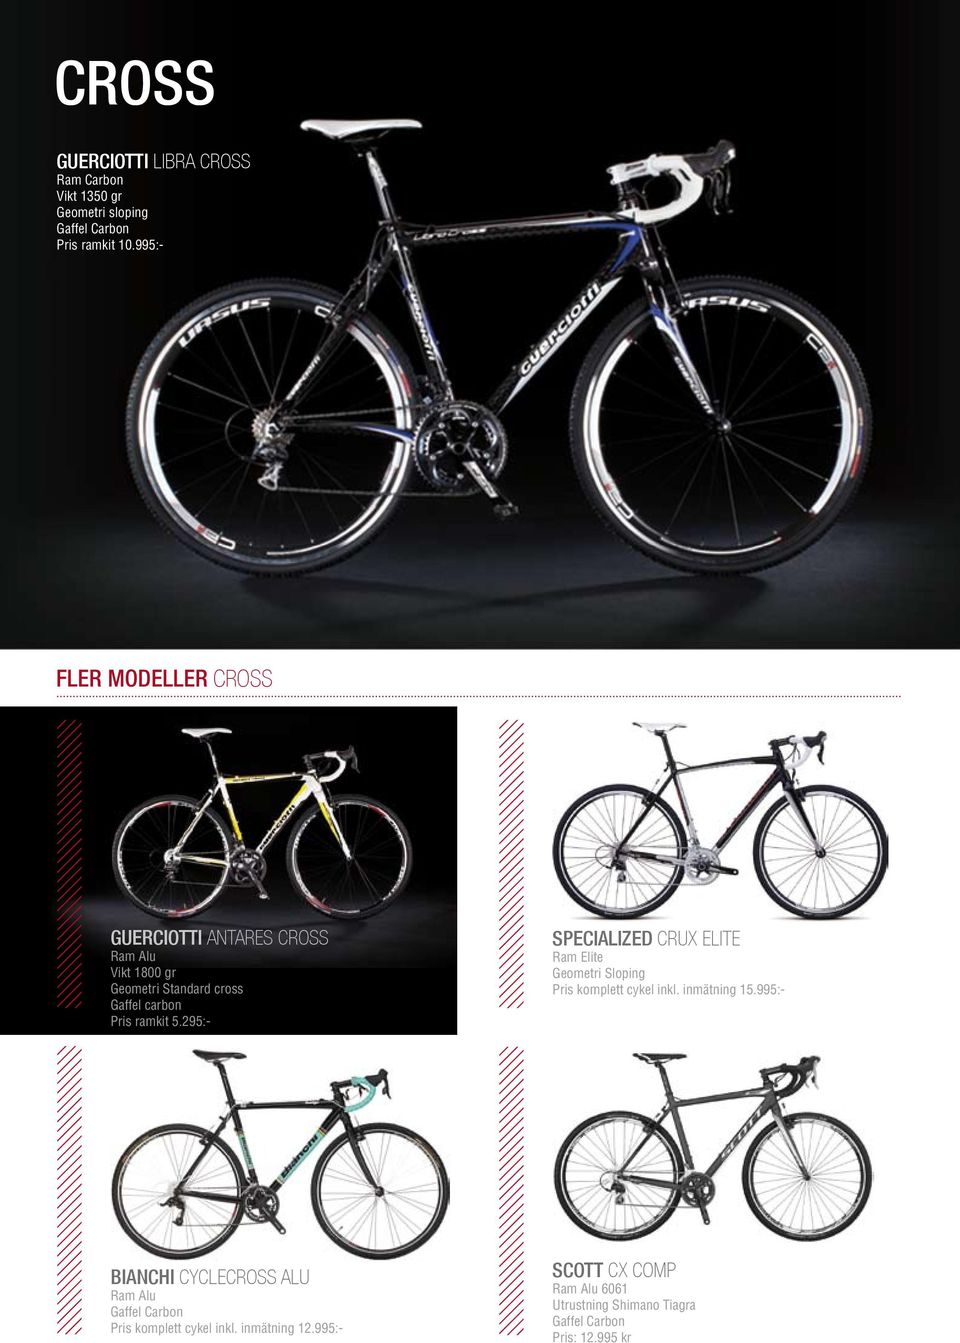 295:- specialized Crux elite Ram Elite Geometri Sloping Pris komplett cykel inkl. inmätning 15.